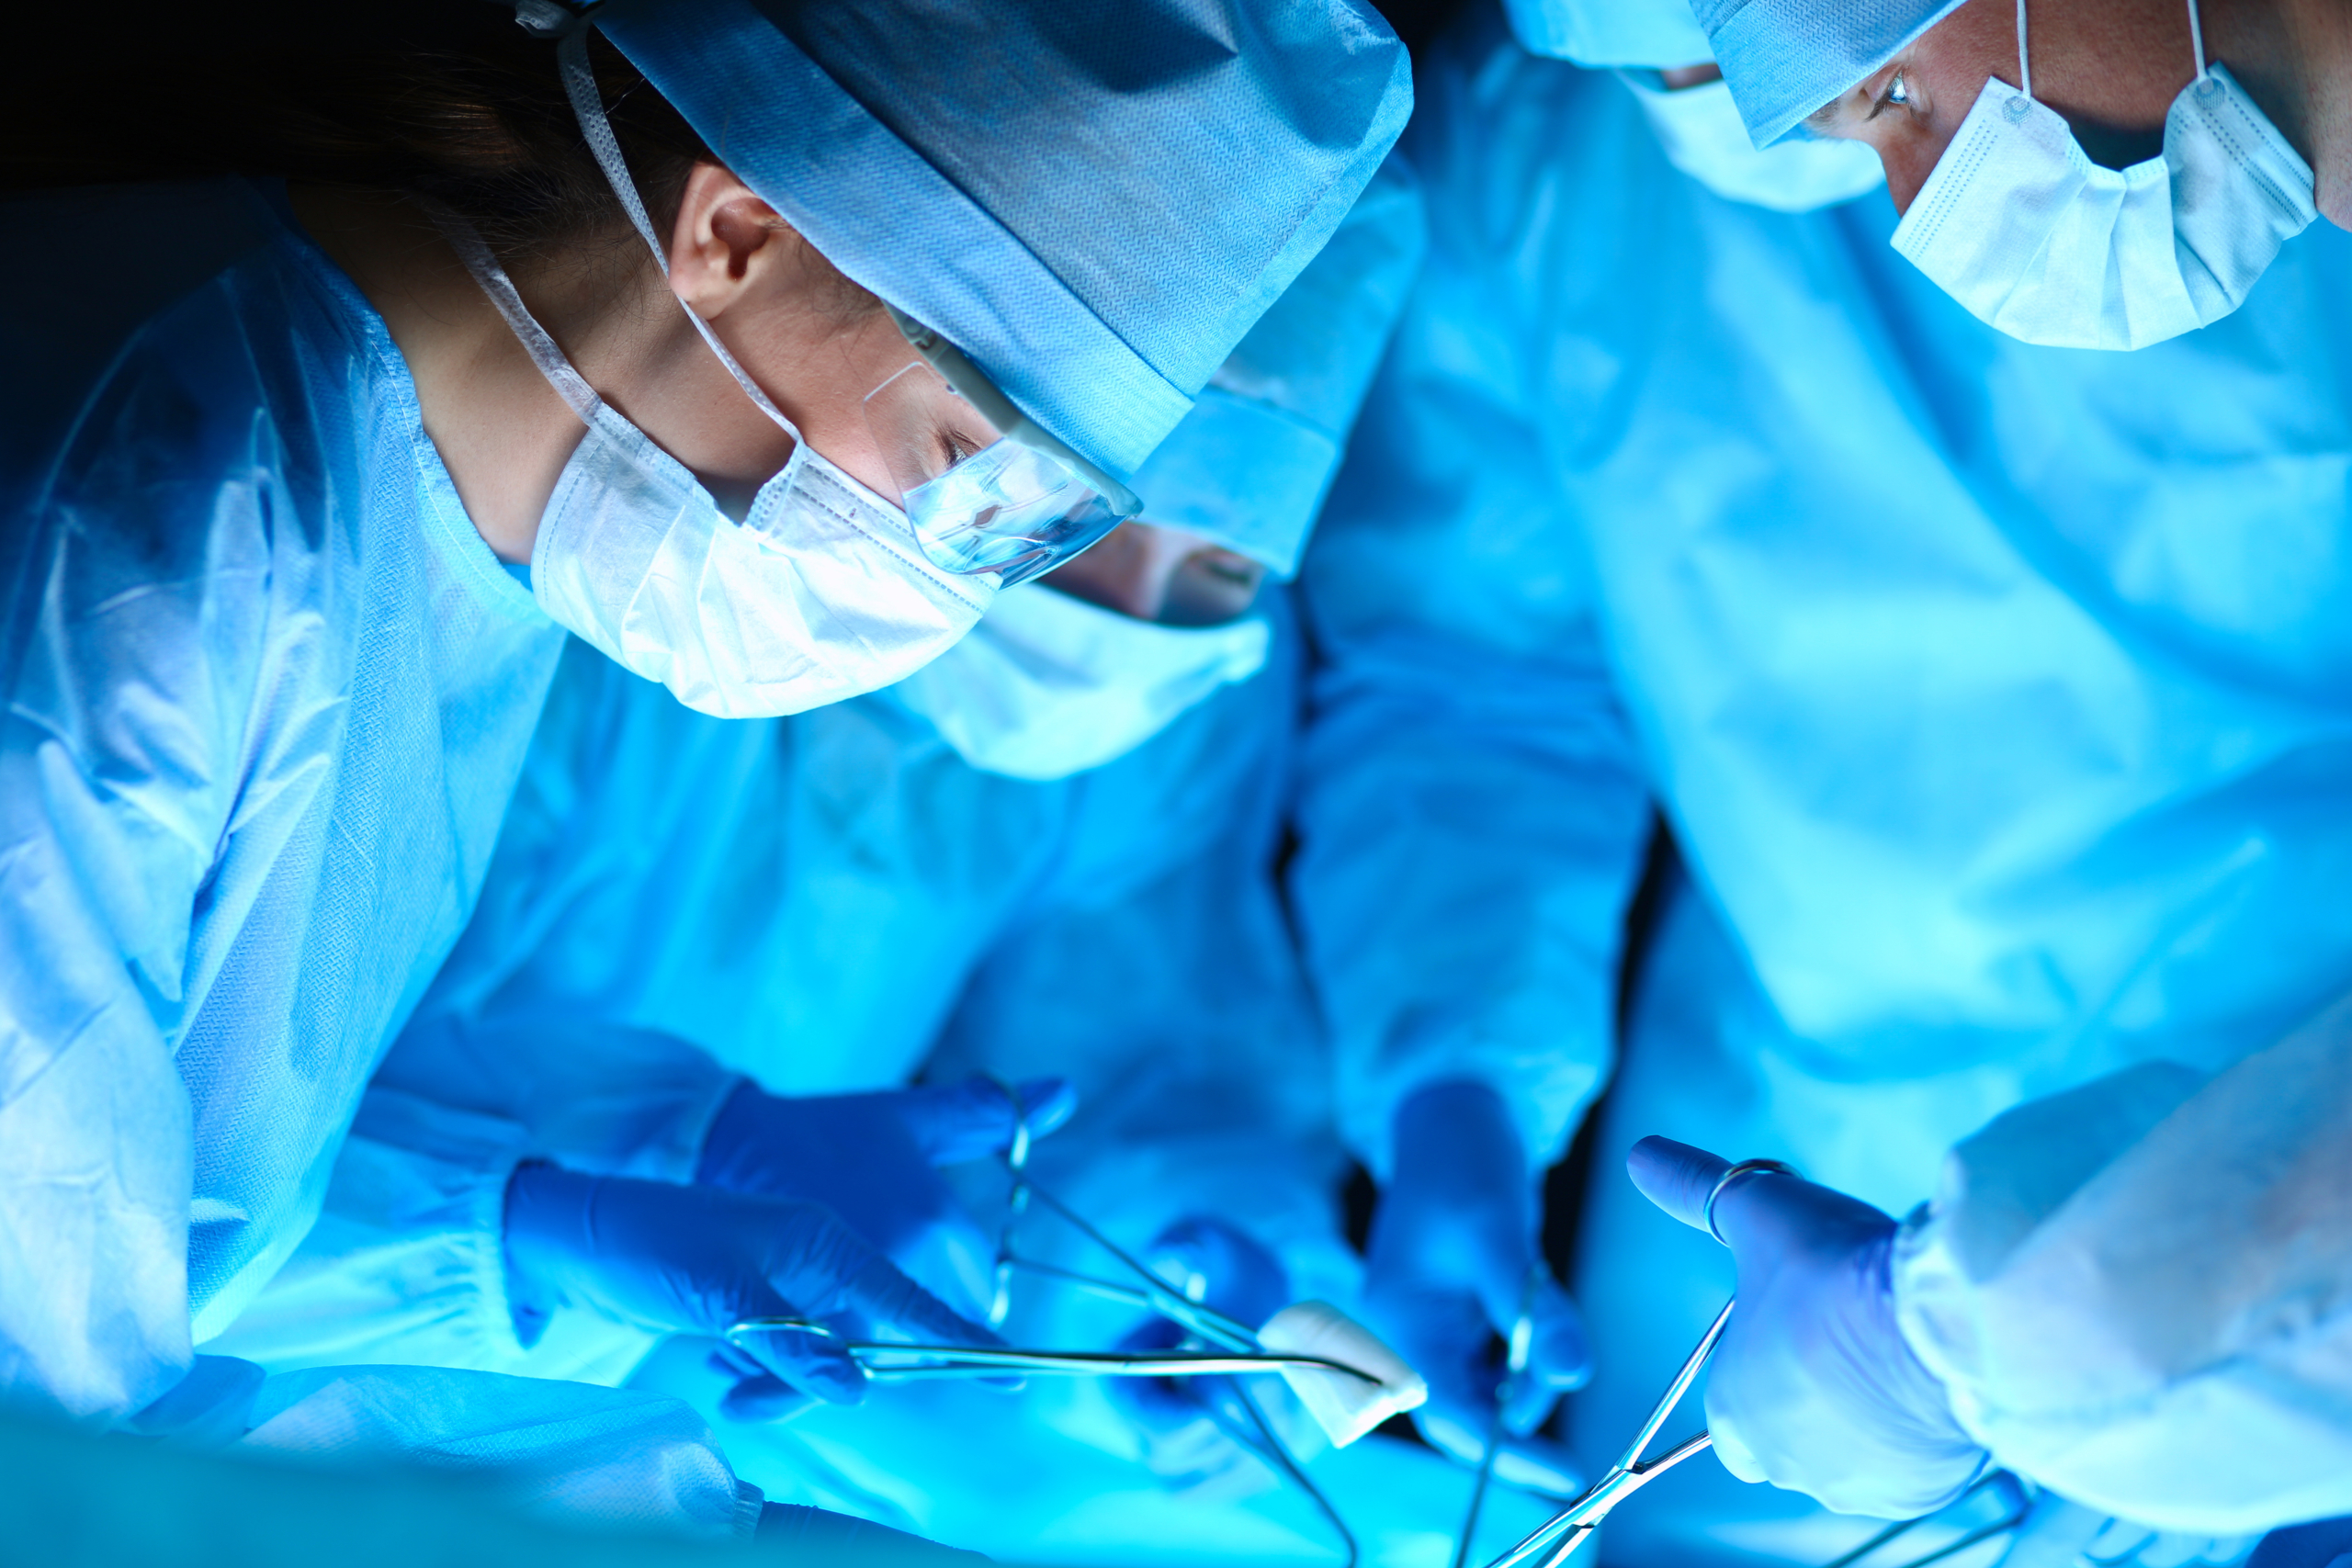 Outpatient Surgery Center Surgery with Surgeons